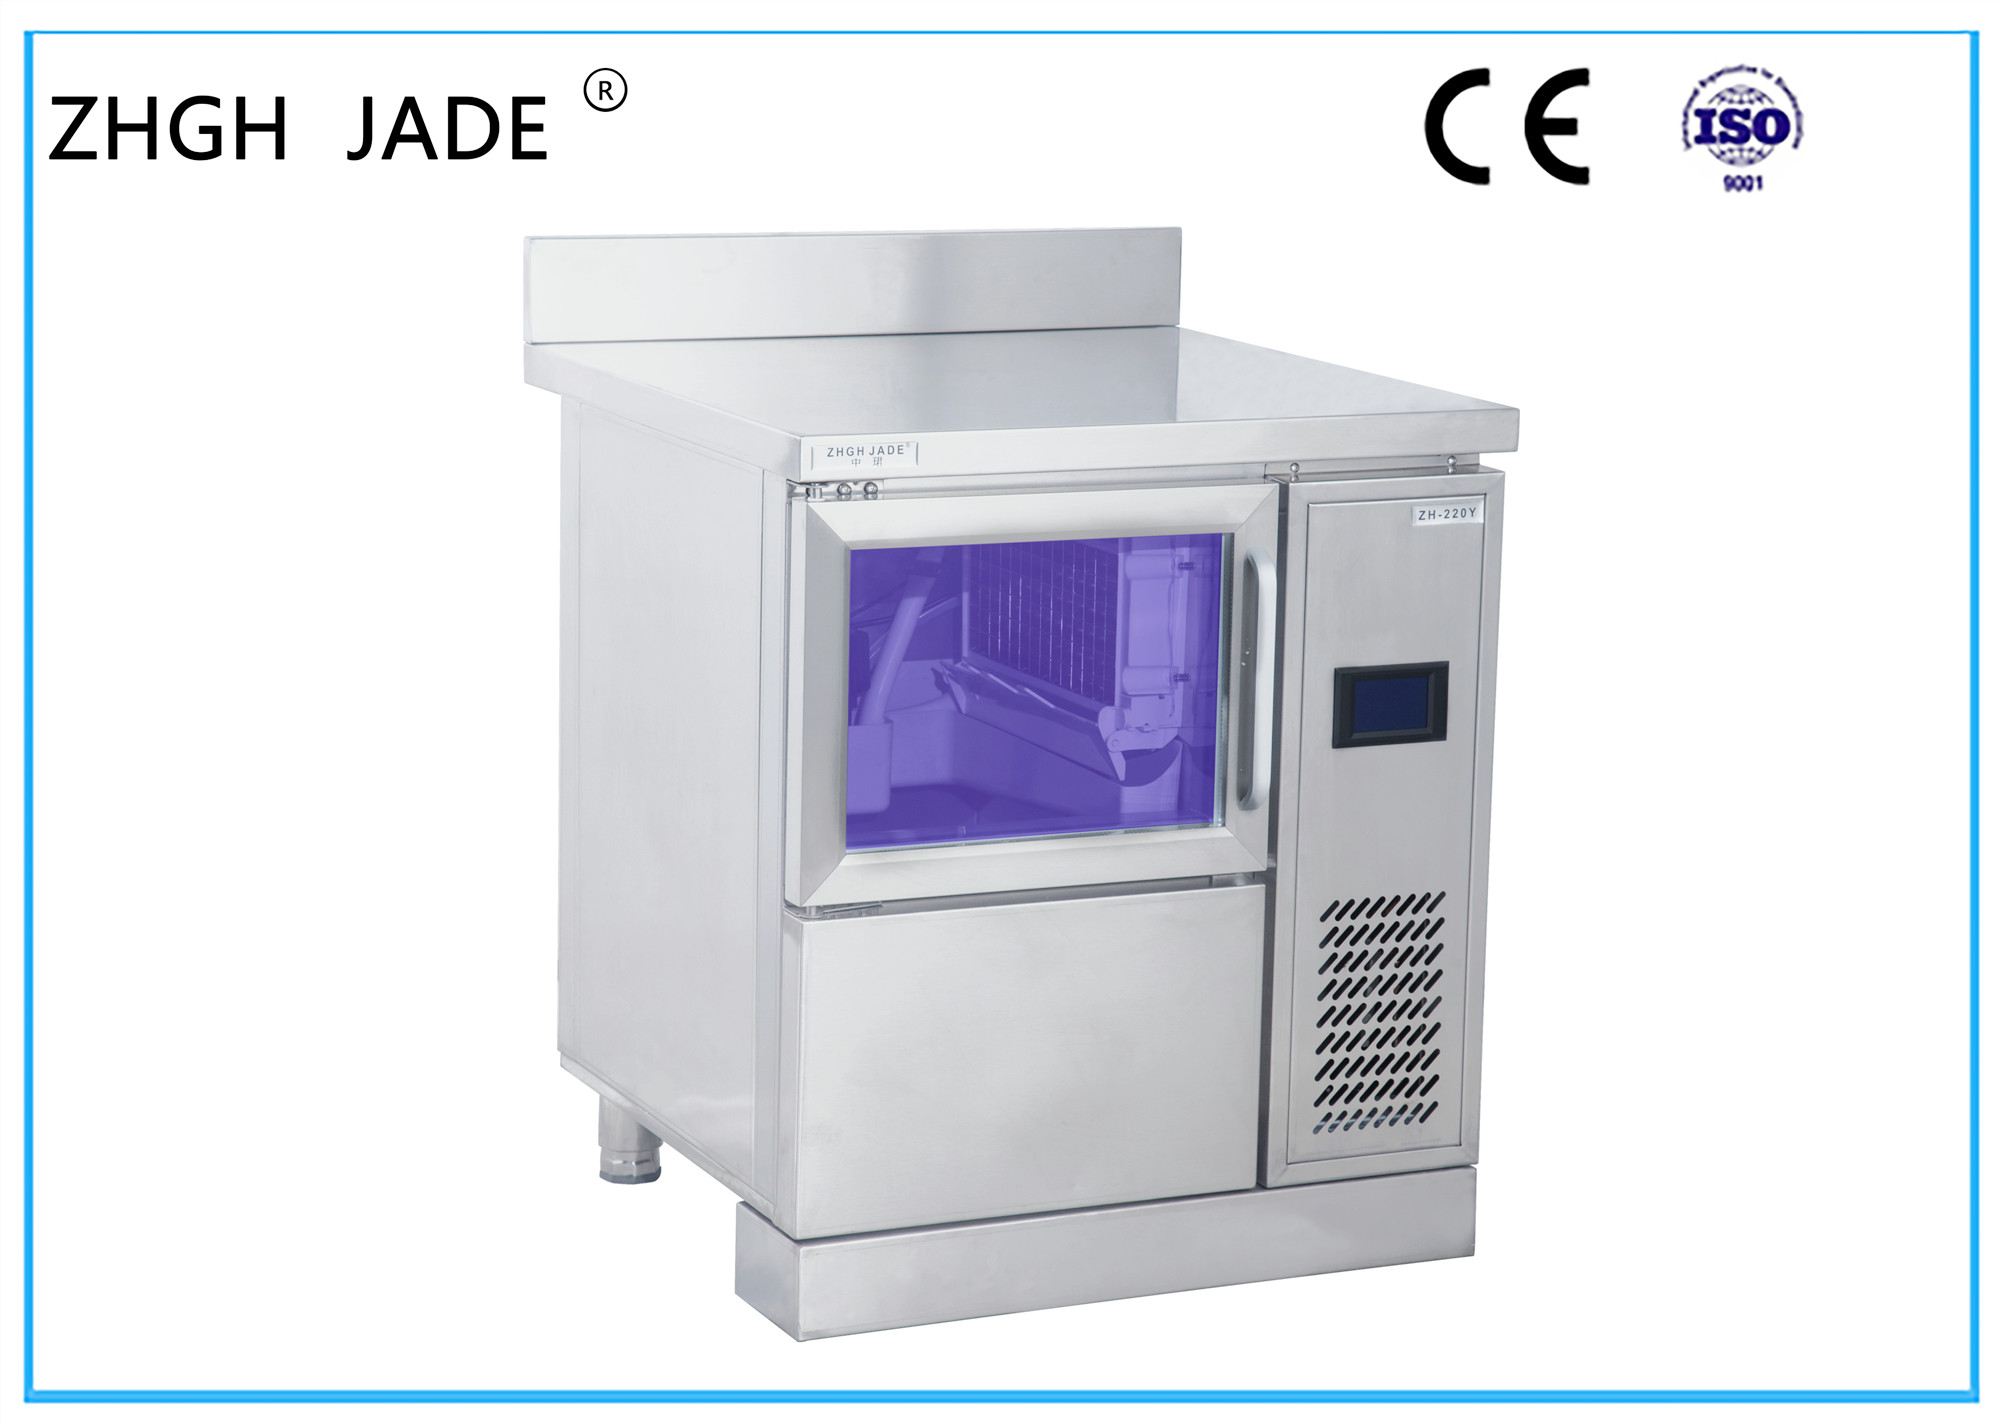 40Kgs Bin Capacity Commercial Bar Ice Machine